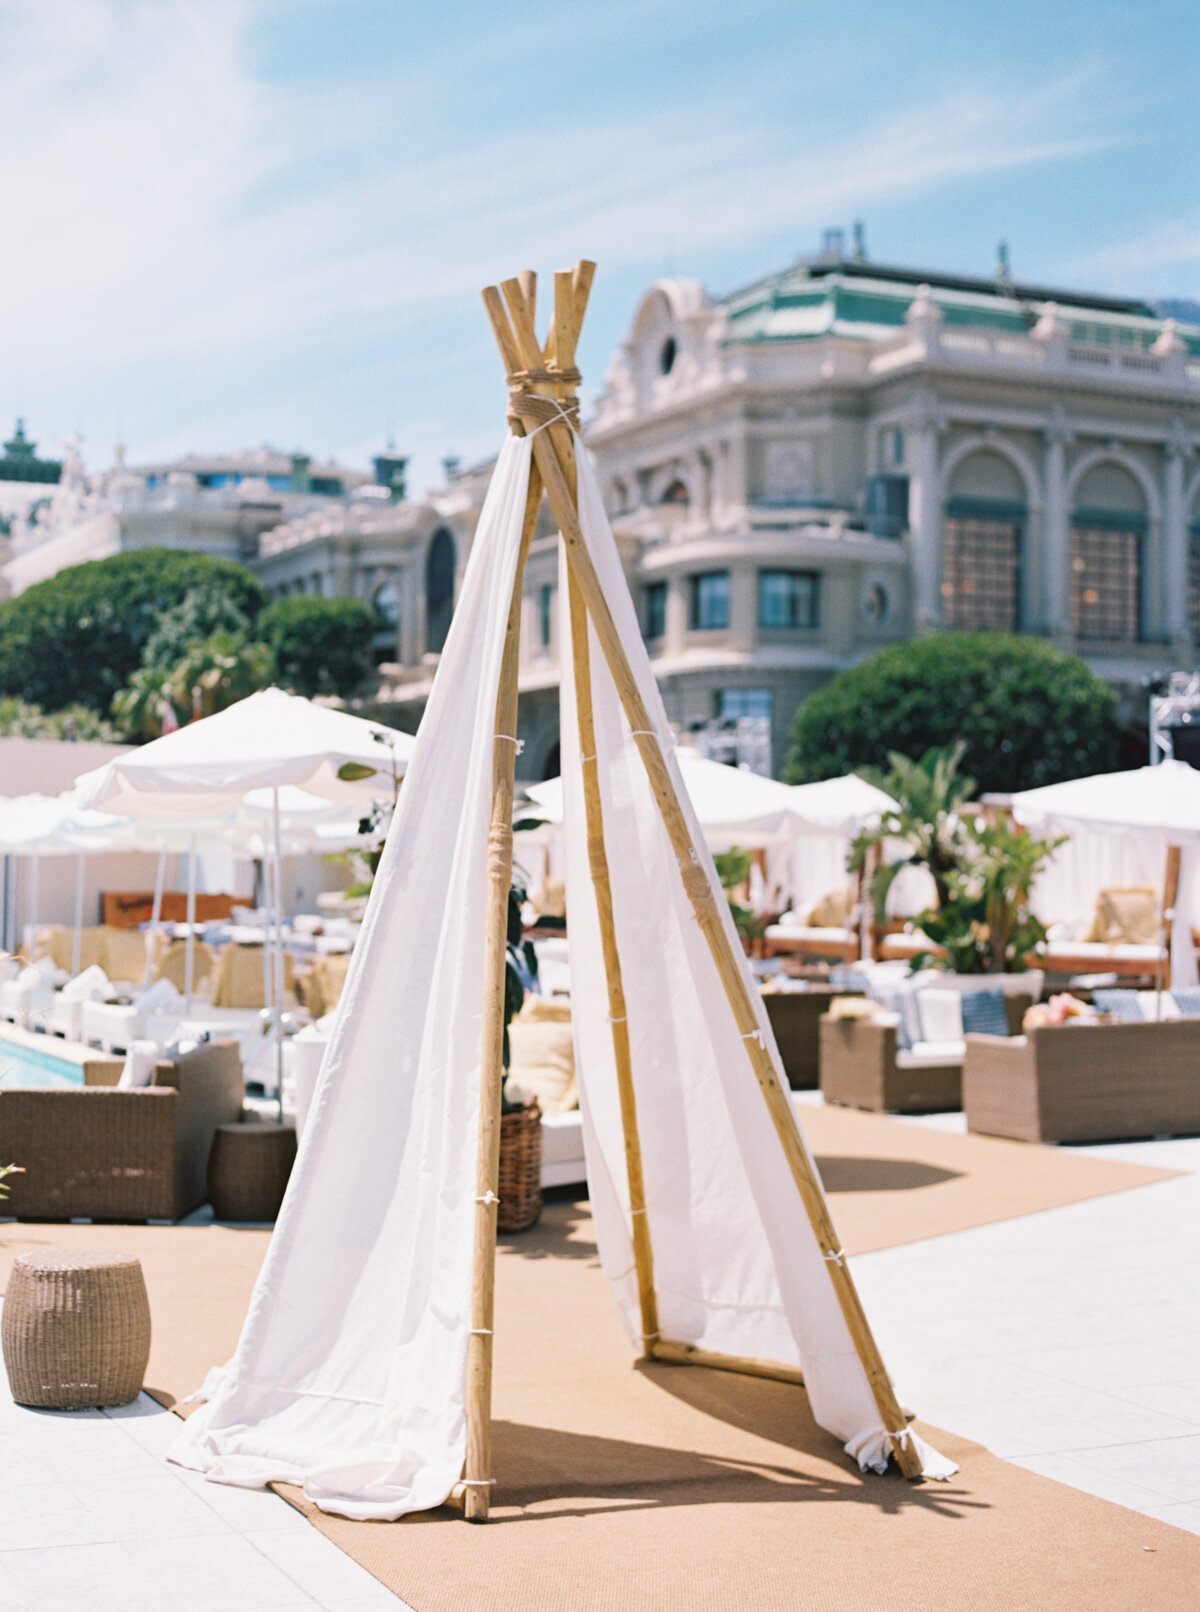 Nikki-Beach-Club-Pool-Monaco-Nice-Saint Tropez-Welcome-Dinner-Katie-Grant-destination-wedding (3 of 22).jpg